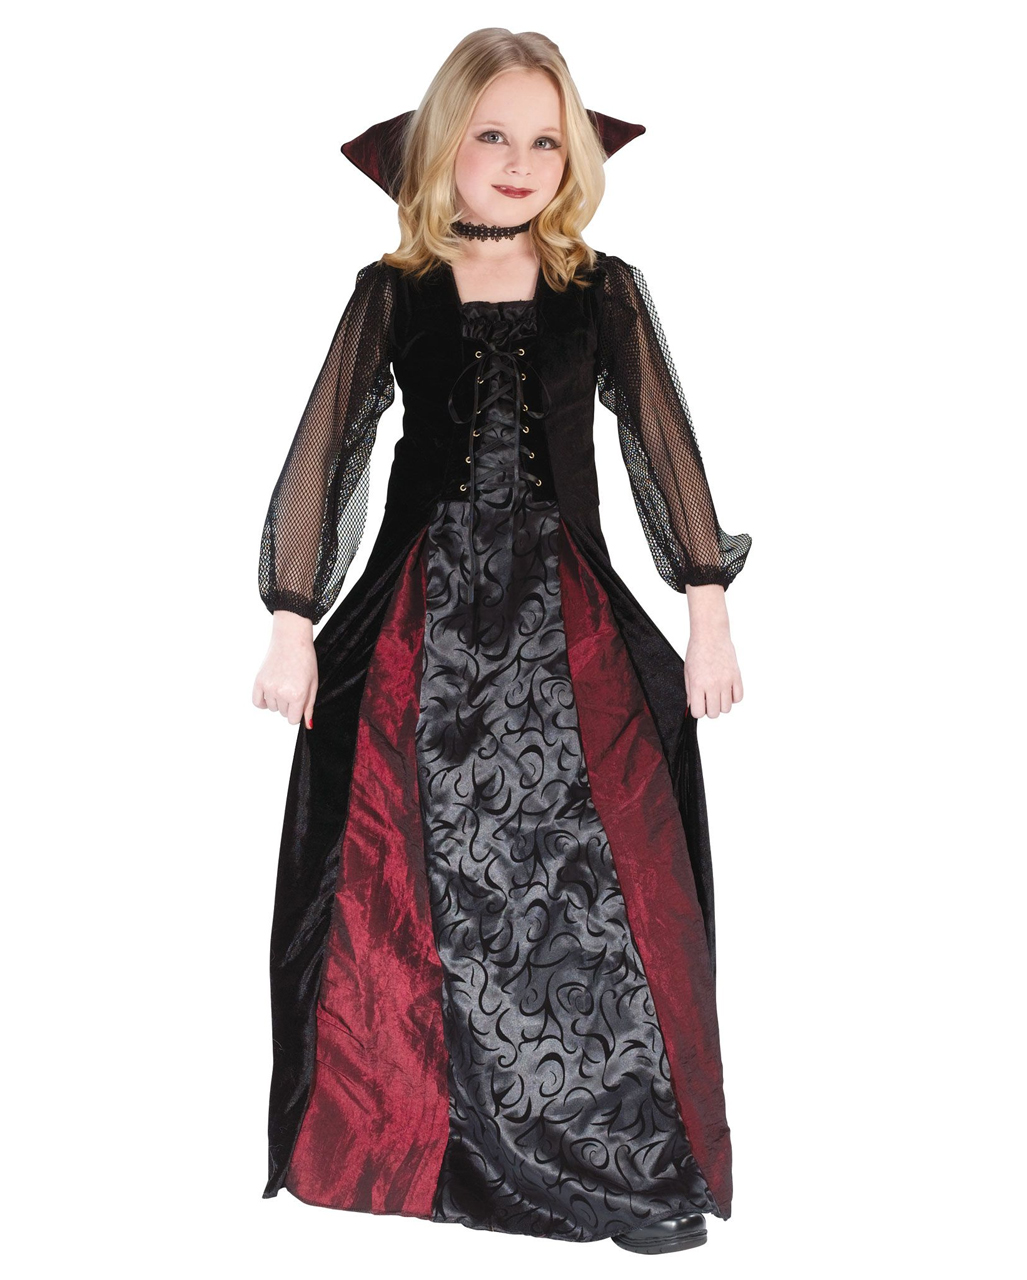 Lady Draculina Child Costume for Halloween | Horror-Shop.com